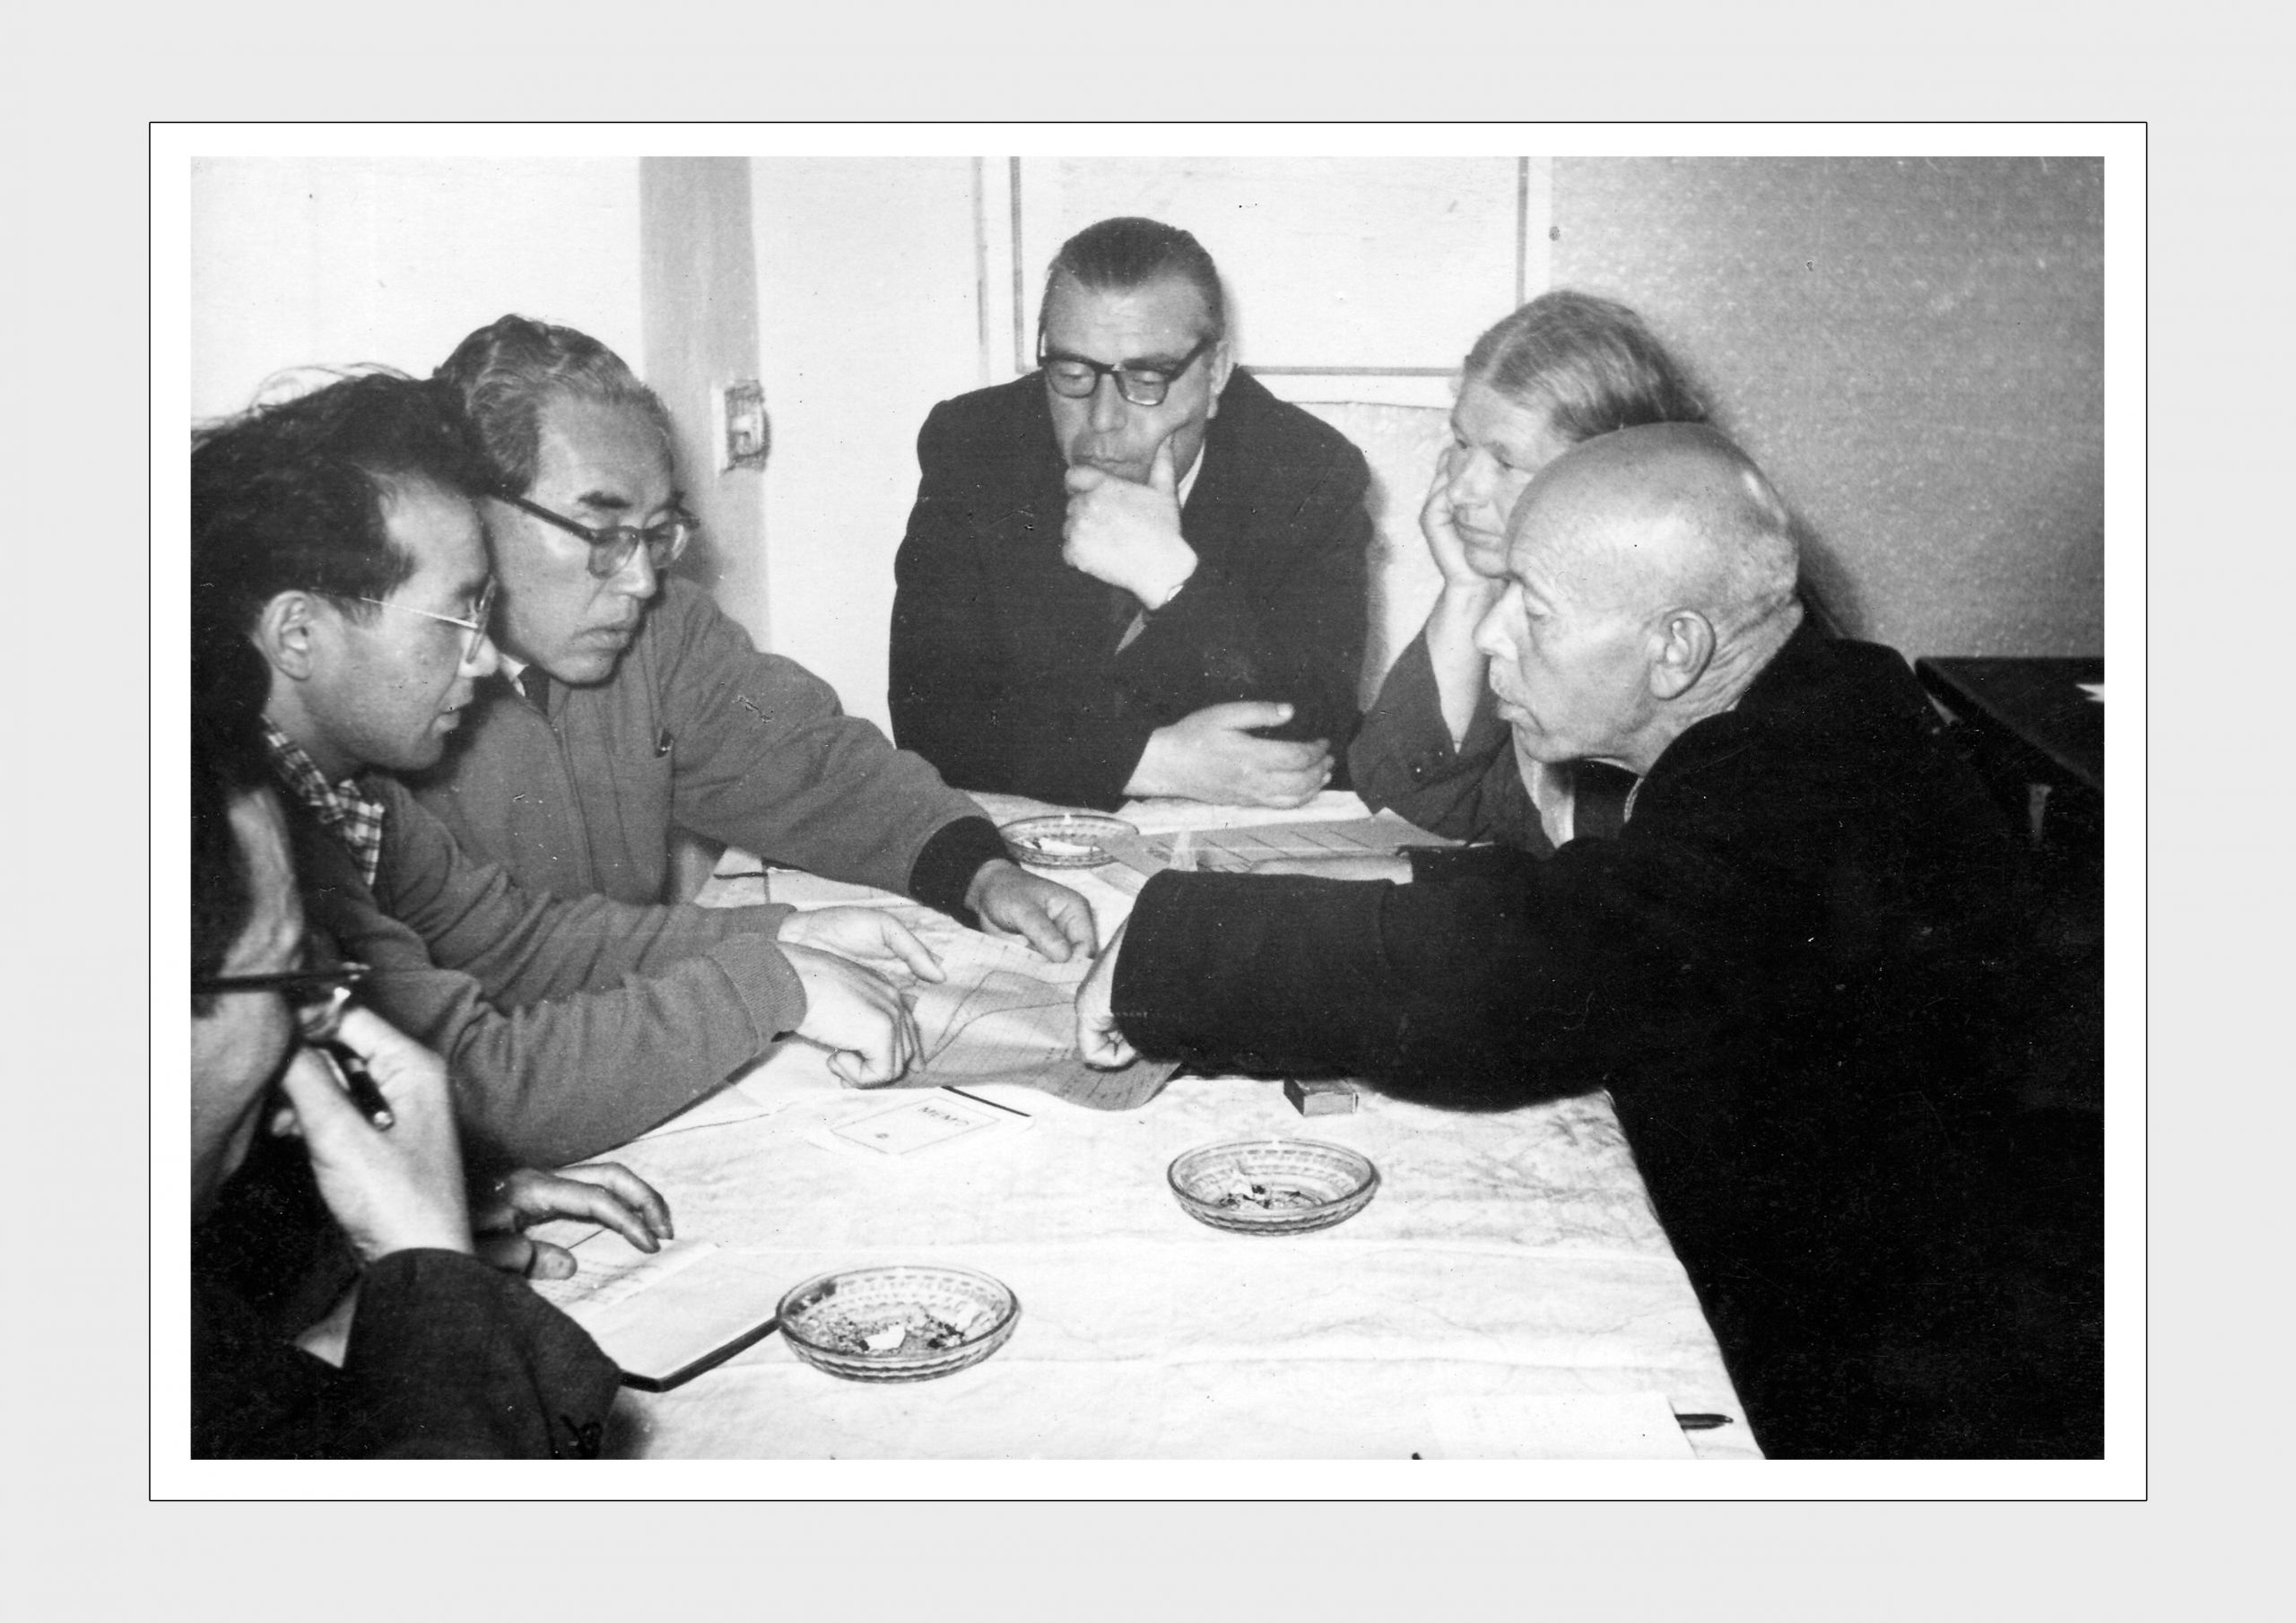 Крохин Е.М. и Крогиус Ф.В. с представителями японской делегации
Озеро Дальнее
1958 г.